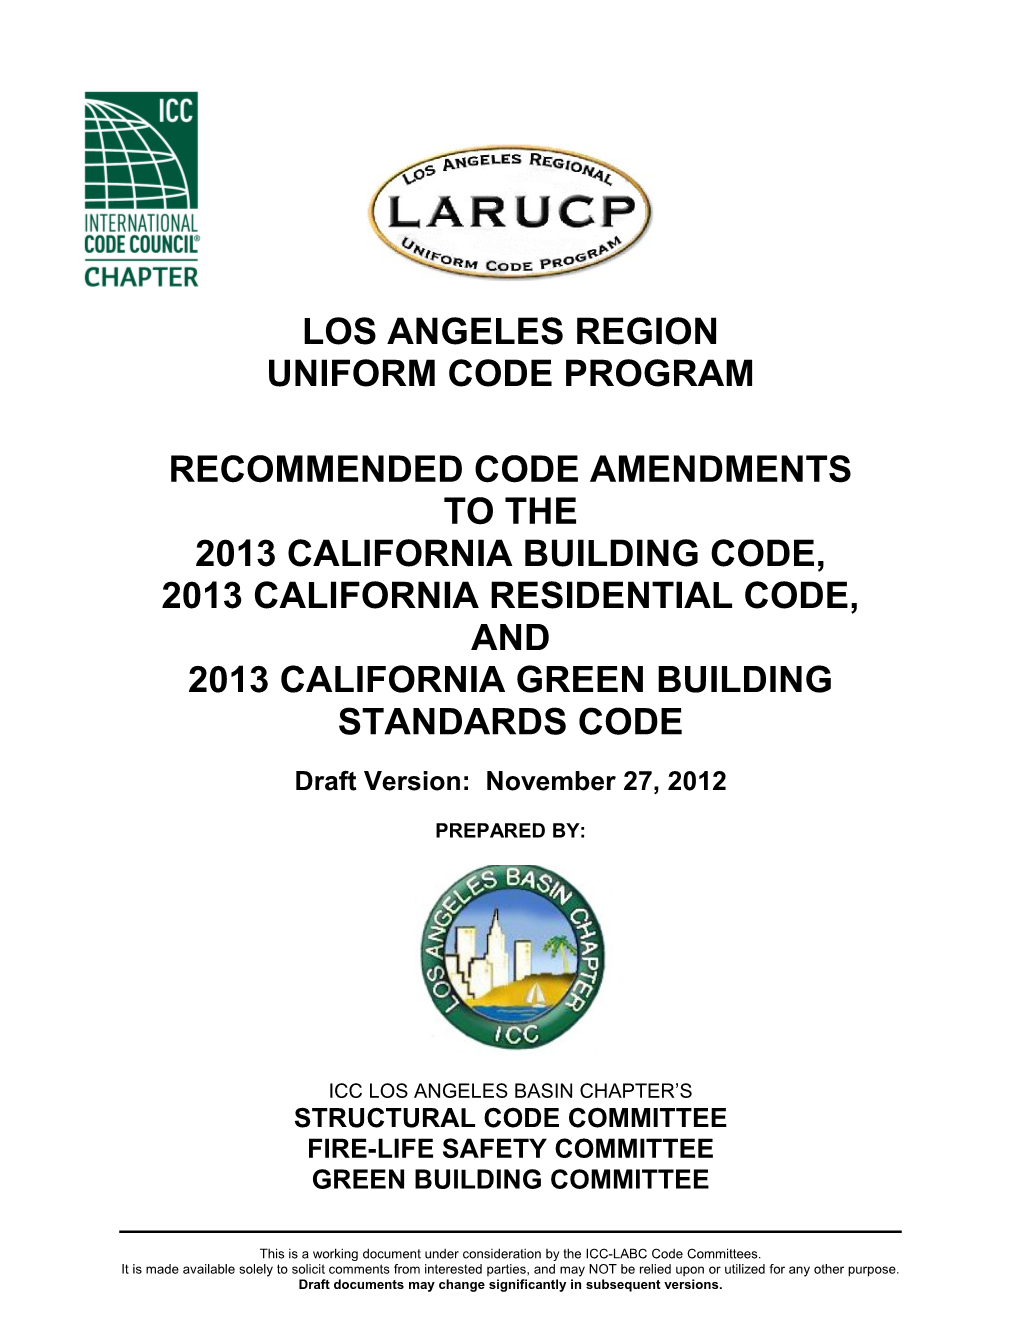 Los Angeles Region Uniform Code Program (Larucp)